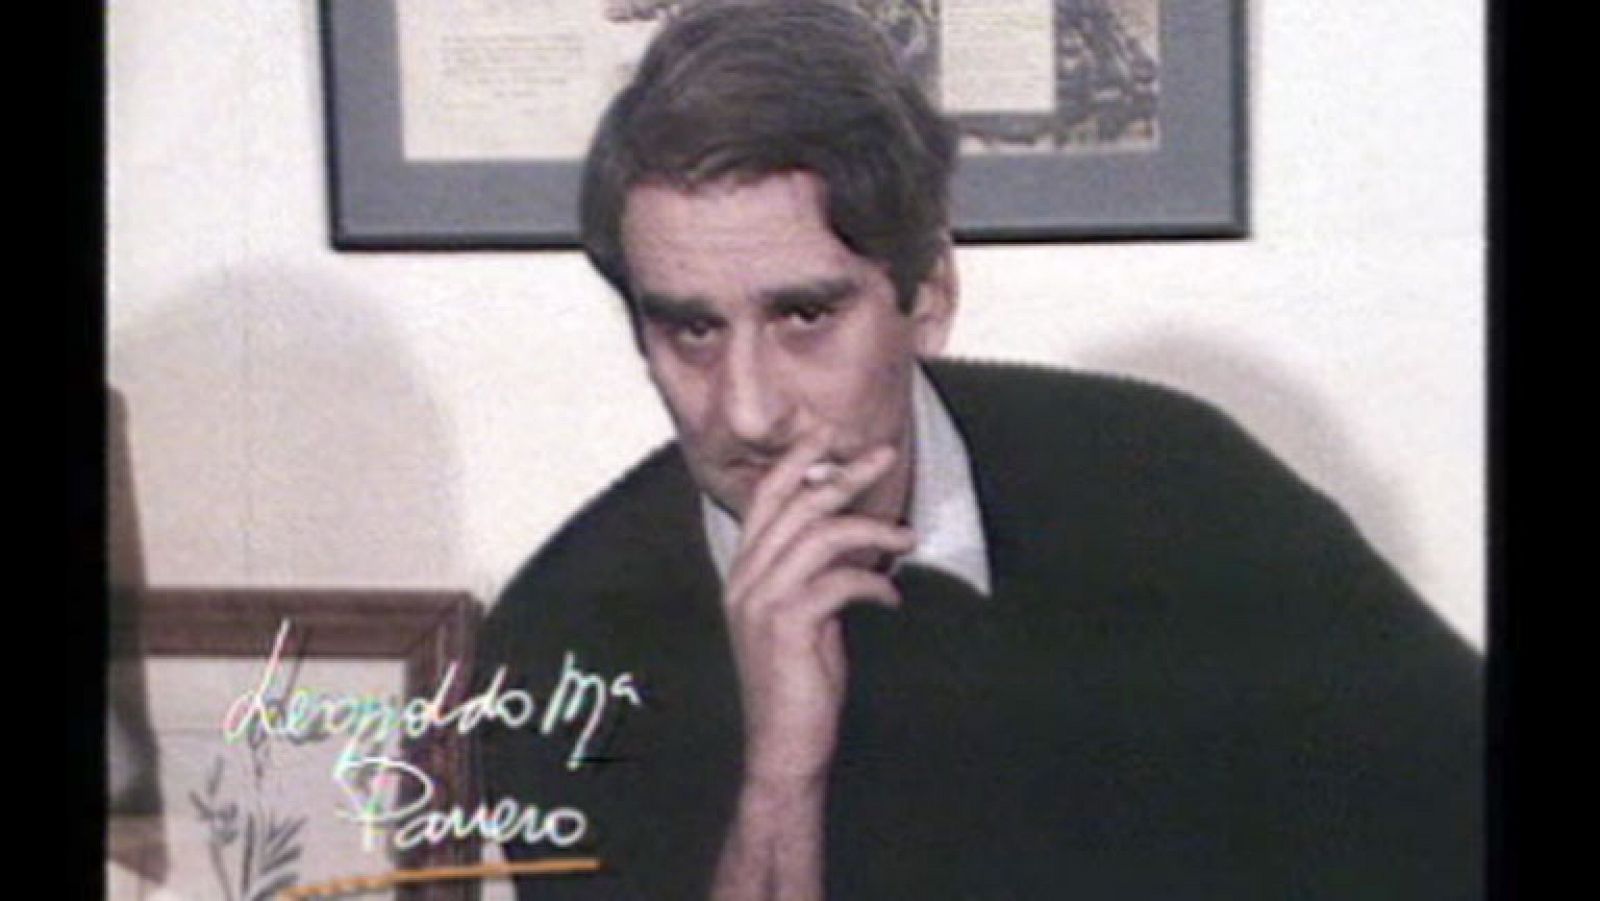 Poetas fin de siglo - Leopoldo María Panero (2000)